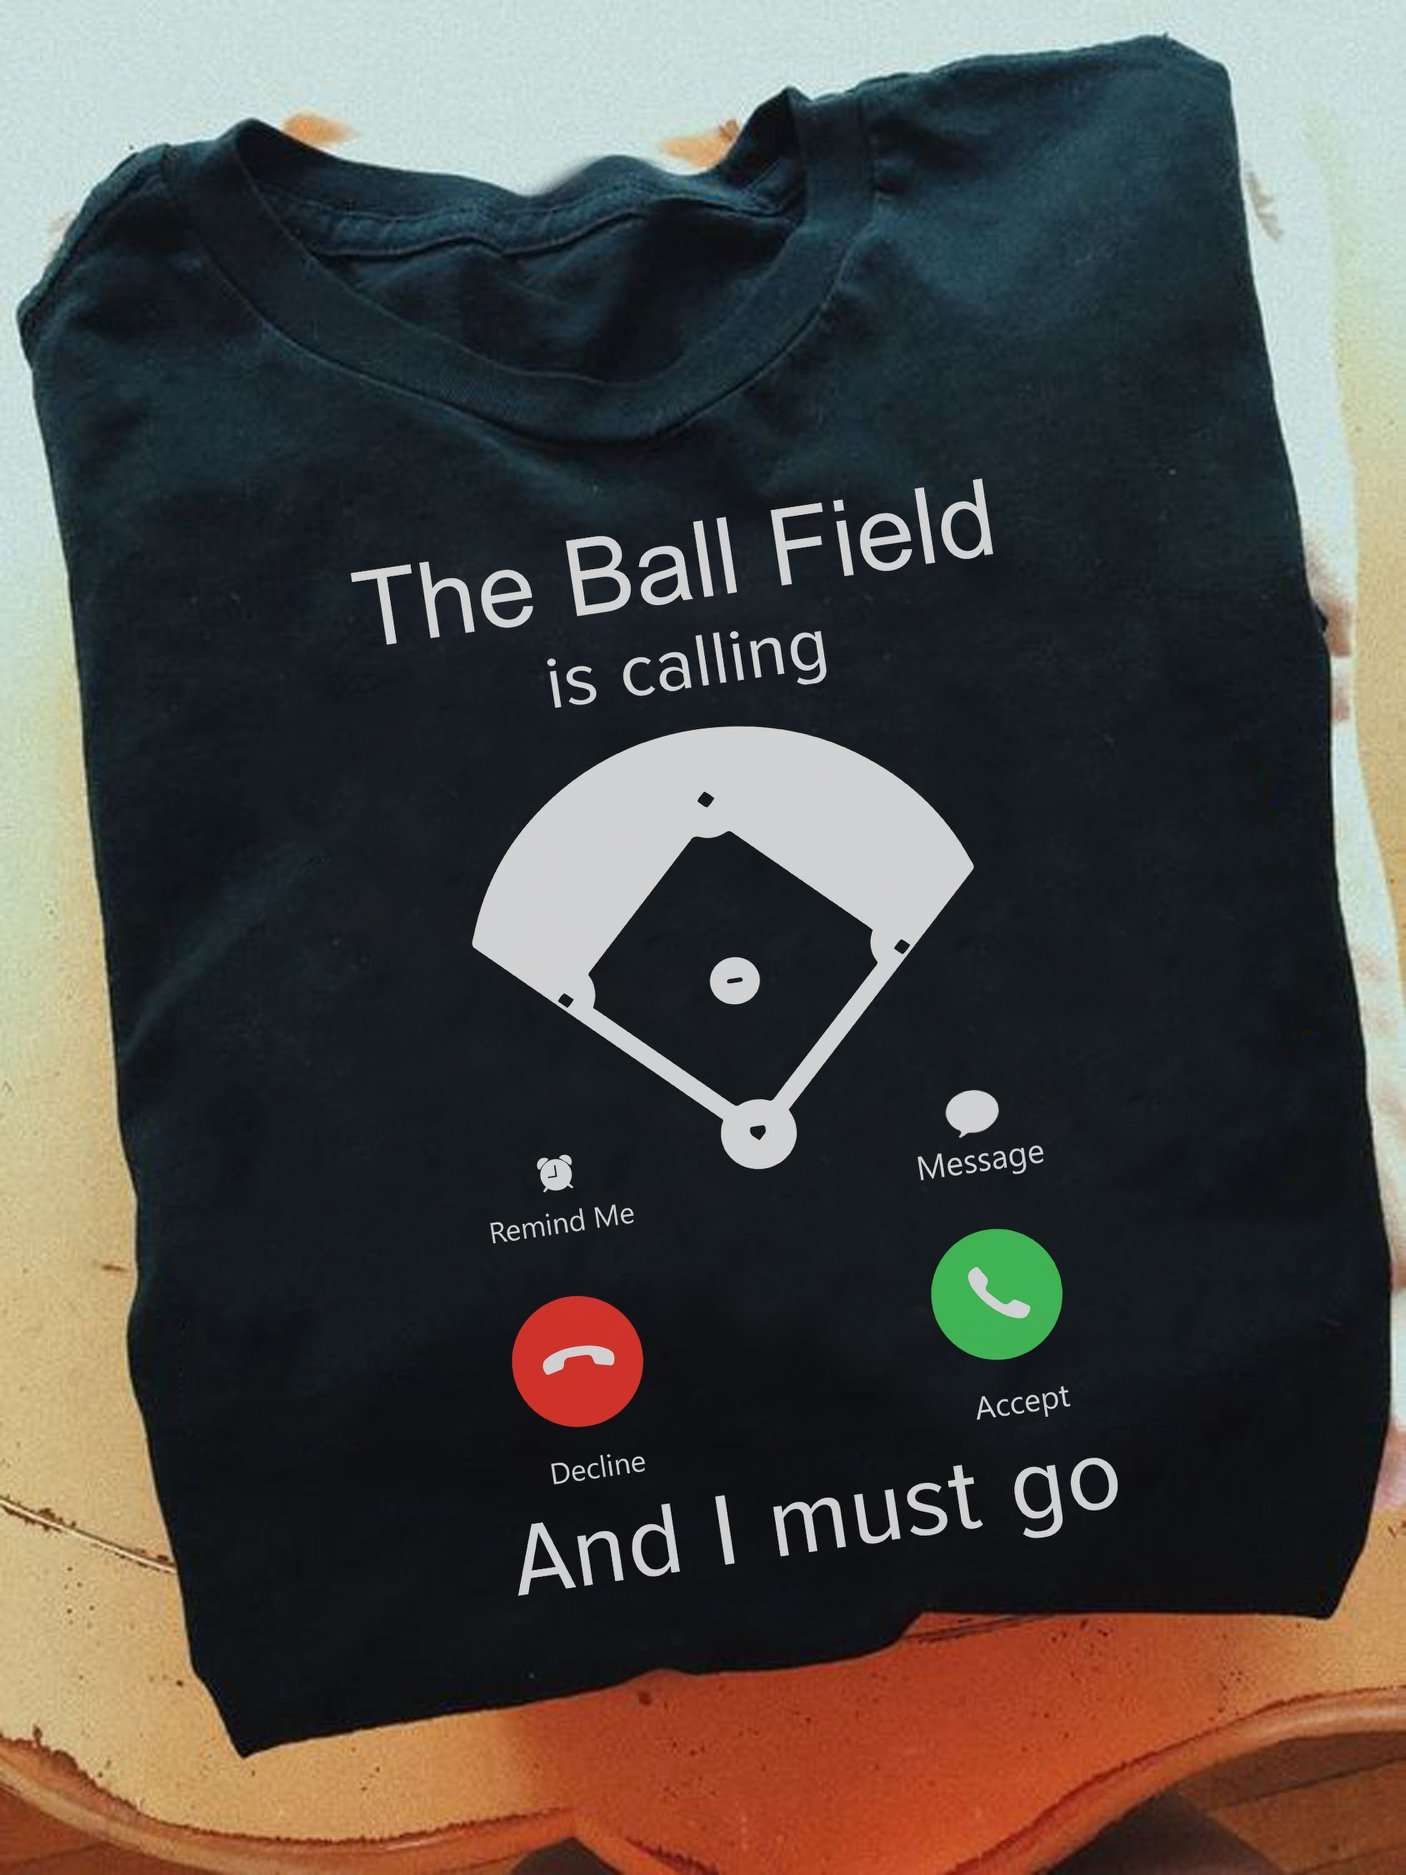 The ball field is calling - Baseball field, love playing baseball